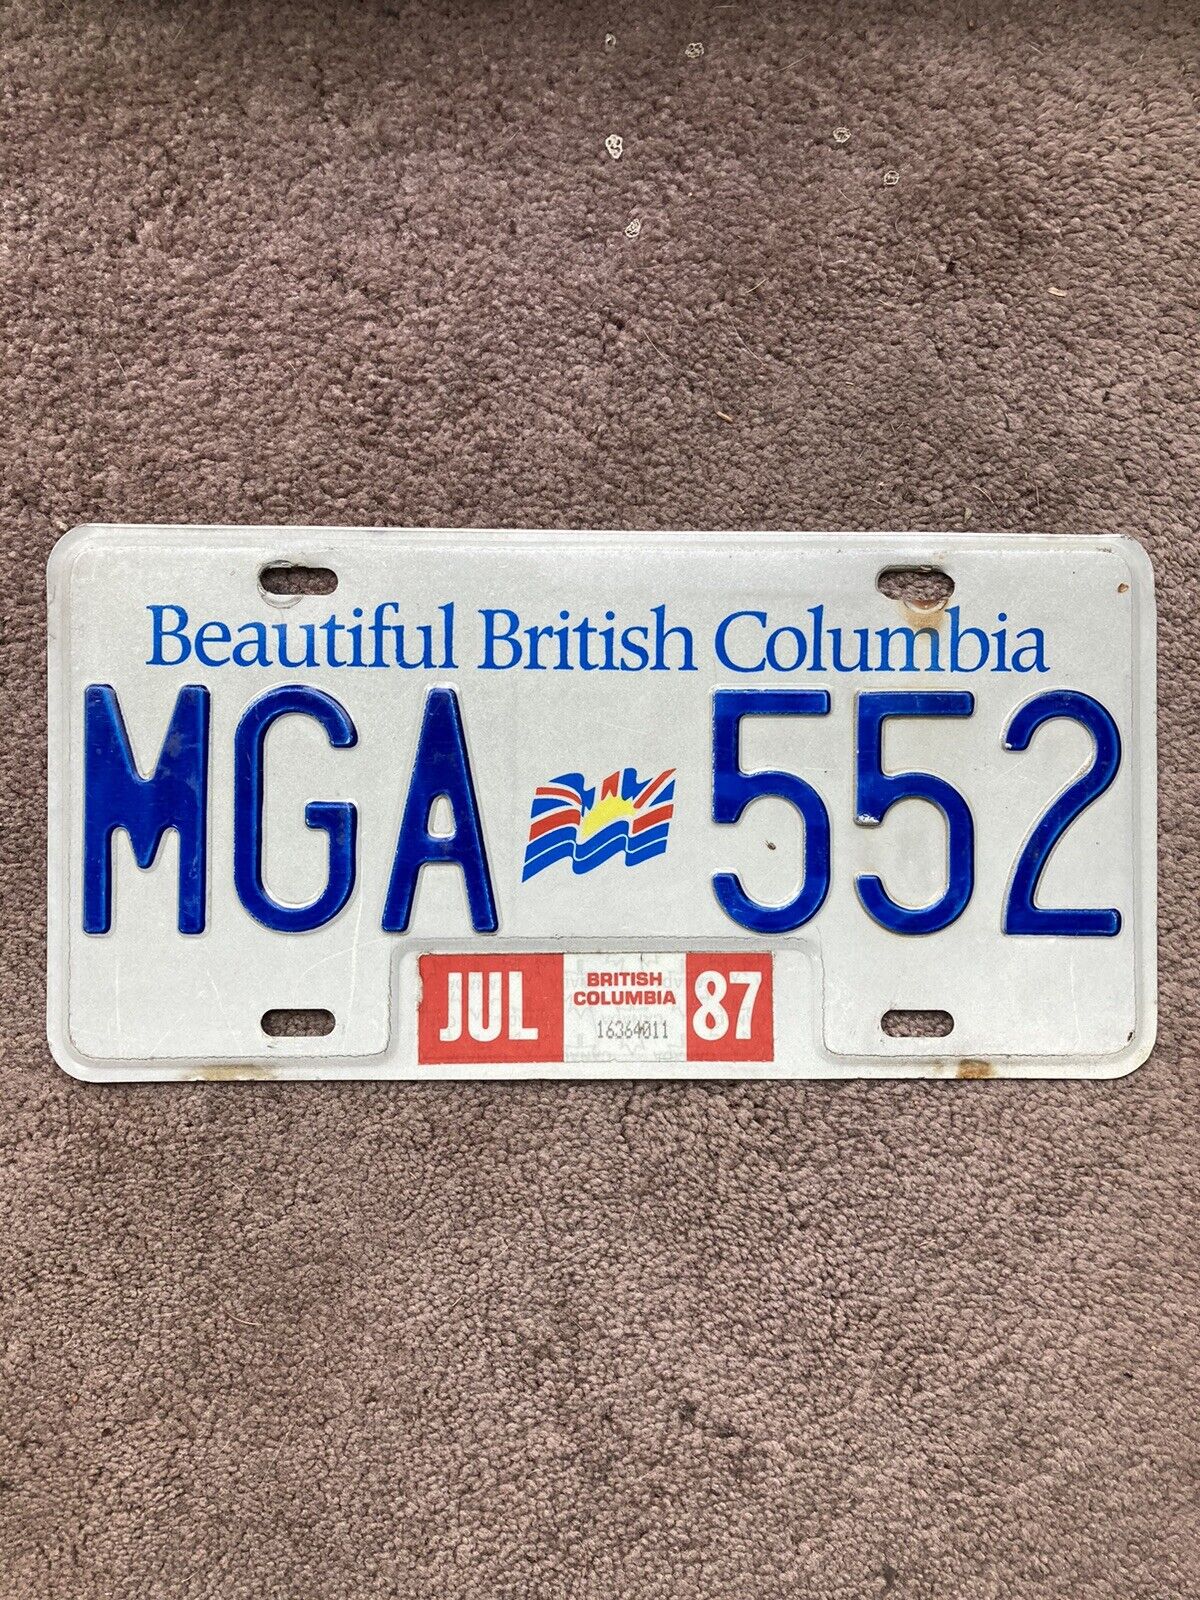 1987 British Columbia License Plate - MGA 552 - Nice